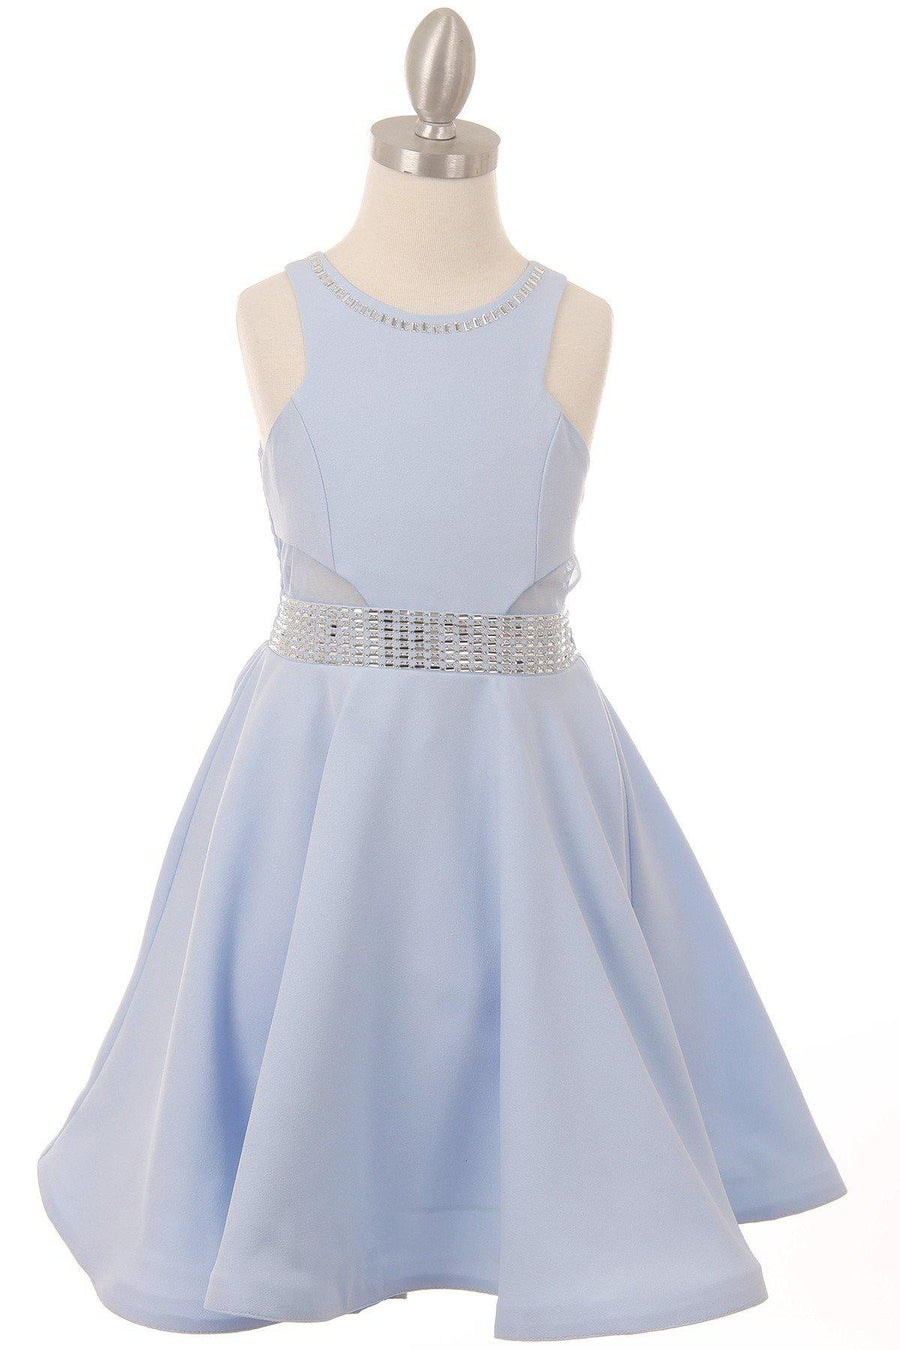 Blue 8 Short Sparkle Flower Girl Dress Sale